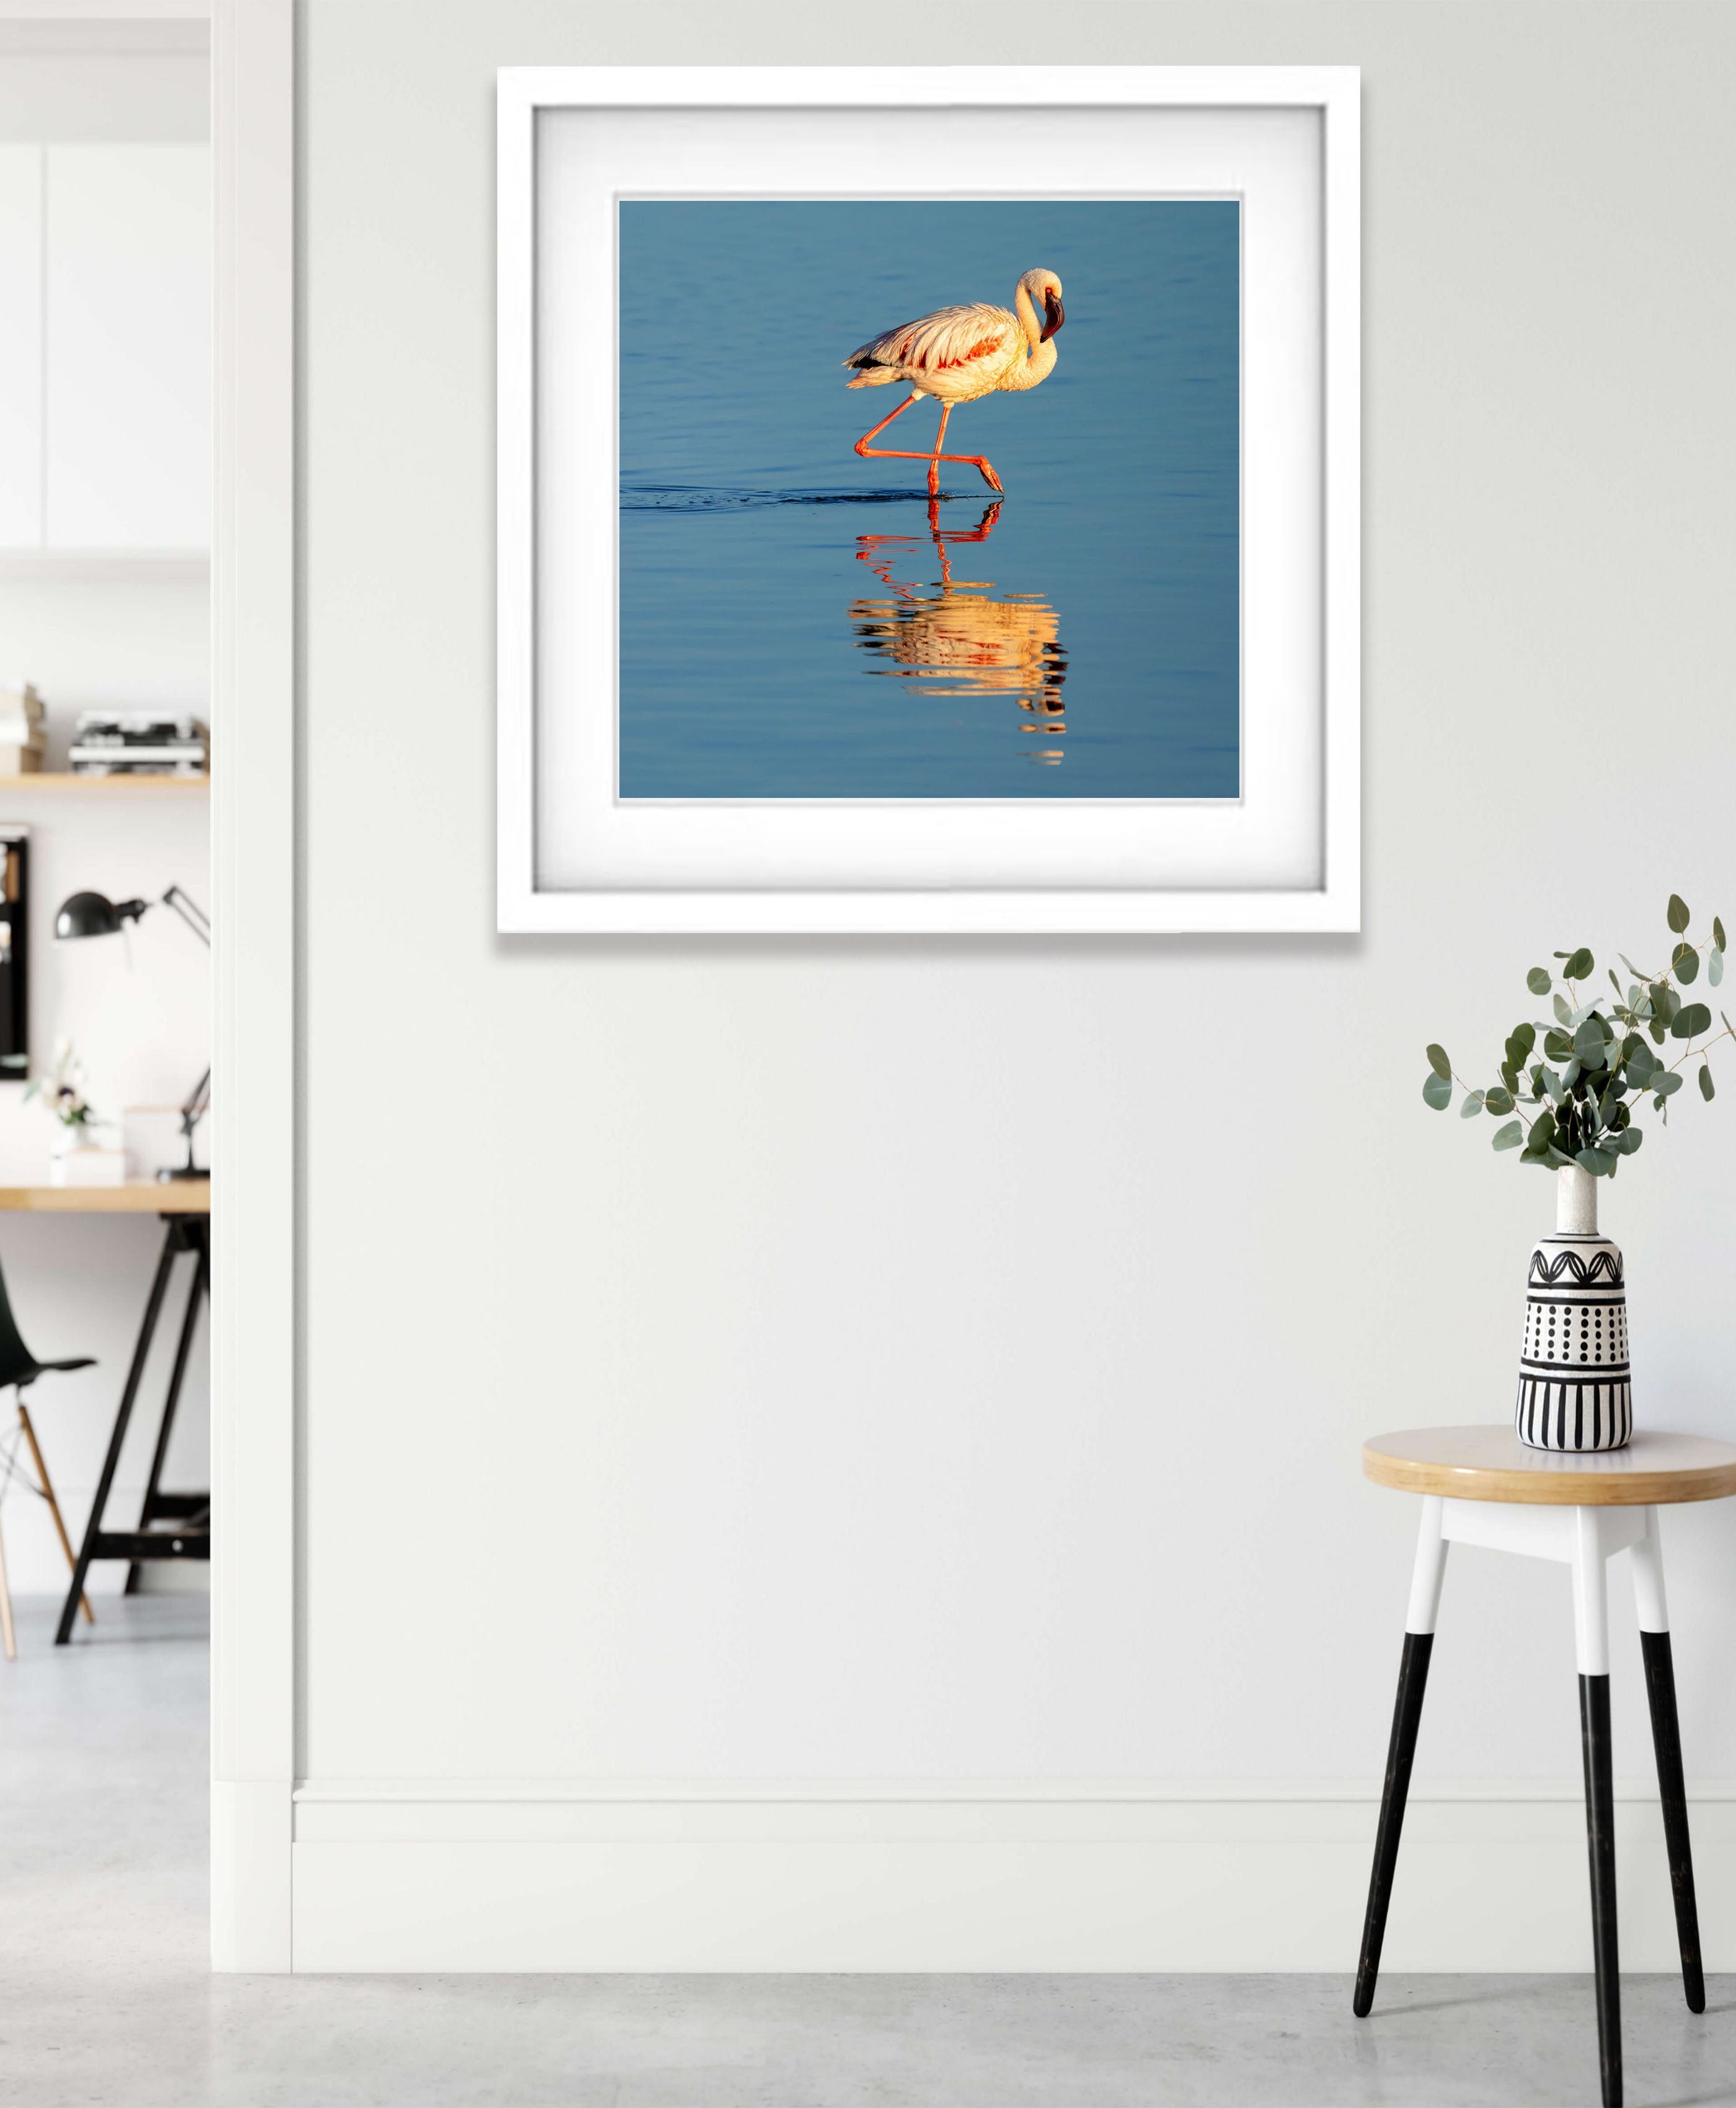 ARTWORK INSTOCK - The Lesser Flamingo, Tanzania - 90x90cms Metal Raw Oak Framed Print